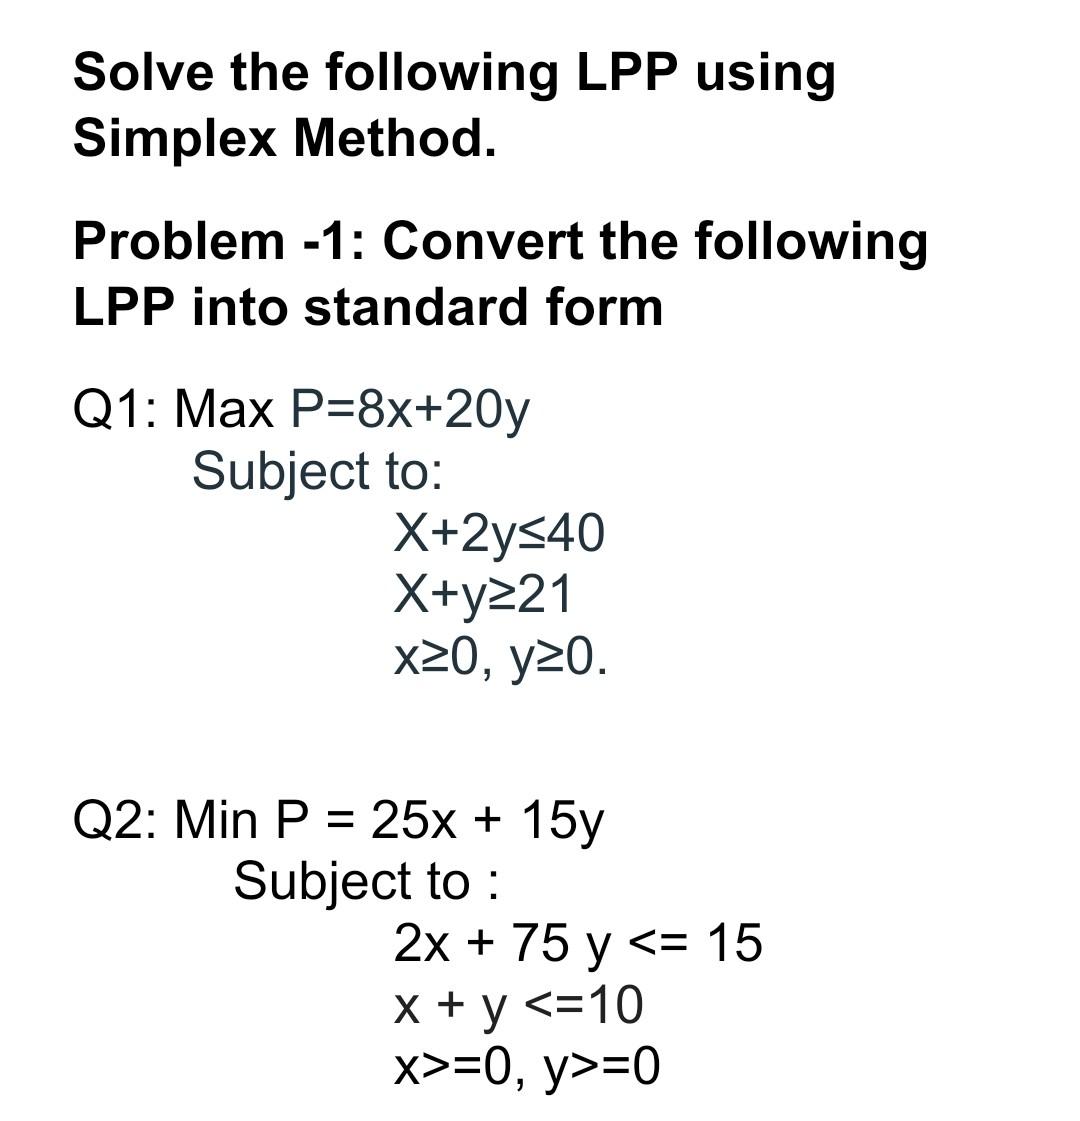 lpp simplex method solved problems